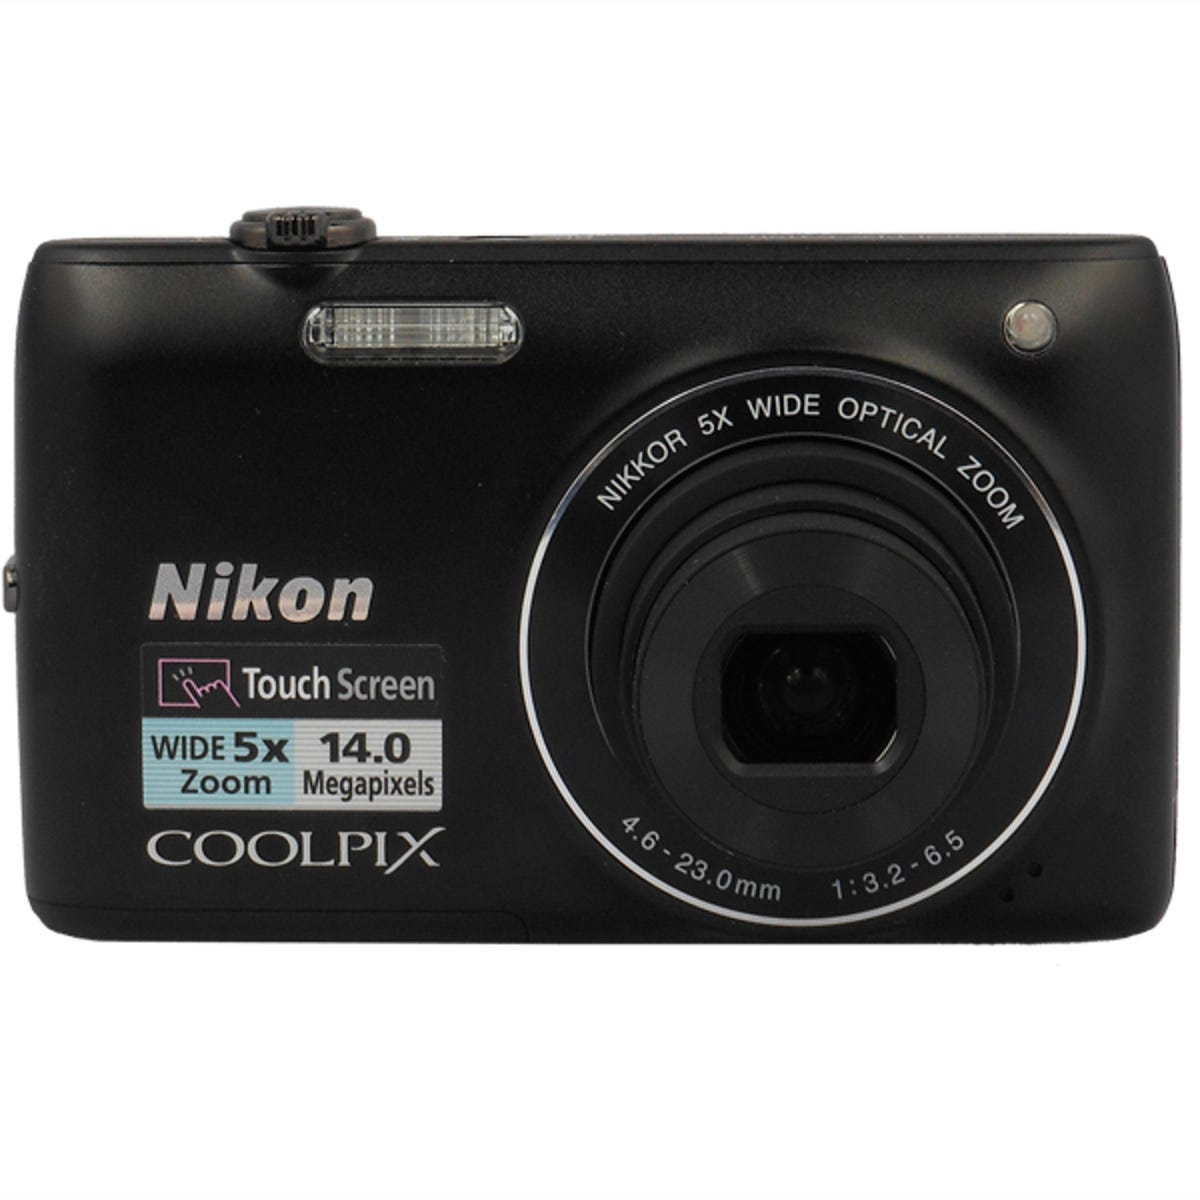 Pinion whip Destroy Nikon Coolpix S4150 review